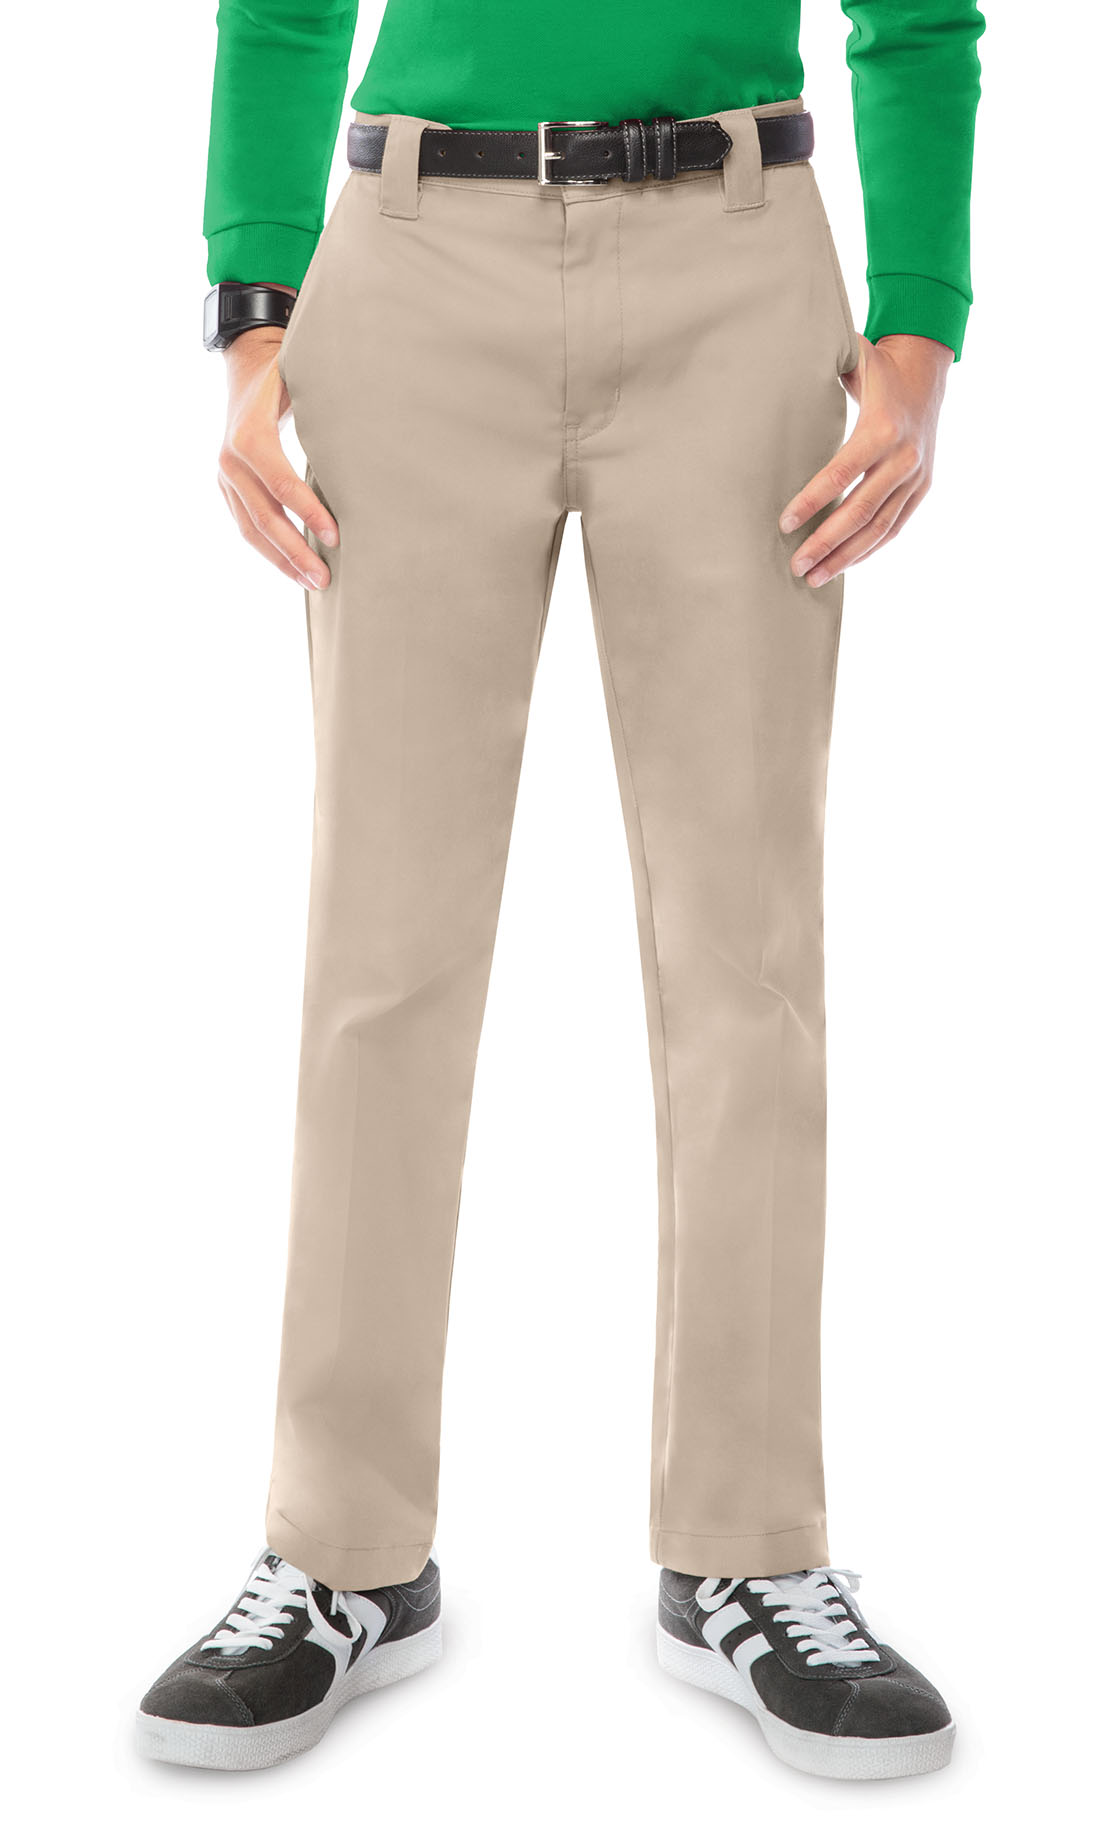 Boys Skinny Trousers Slim Fit Leg School Uniform Pants School/Prom/Work/Formal Pant Adjusters Inside Bottoms 